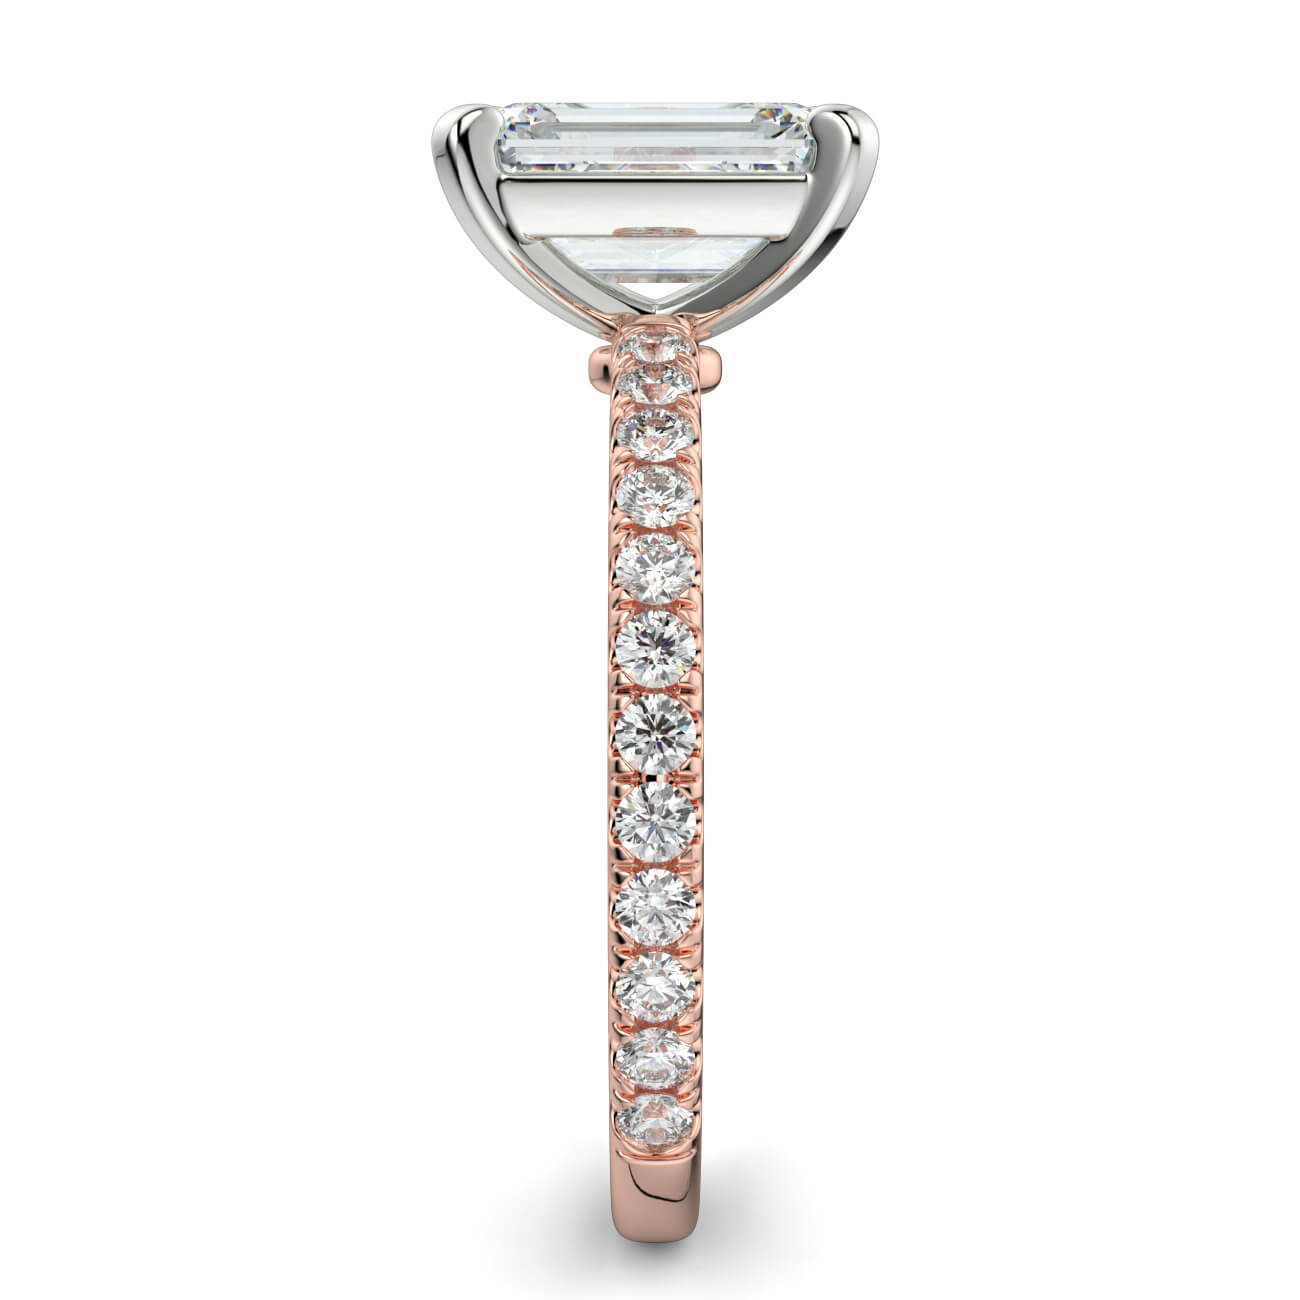 Delicate ‘Liat’ Emerald Cut Diamond Engagement Ring in 18k Rose and White Gold – Australian Diamond Network